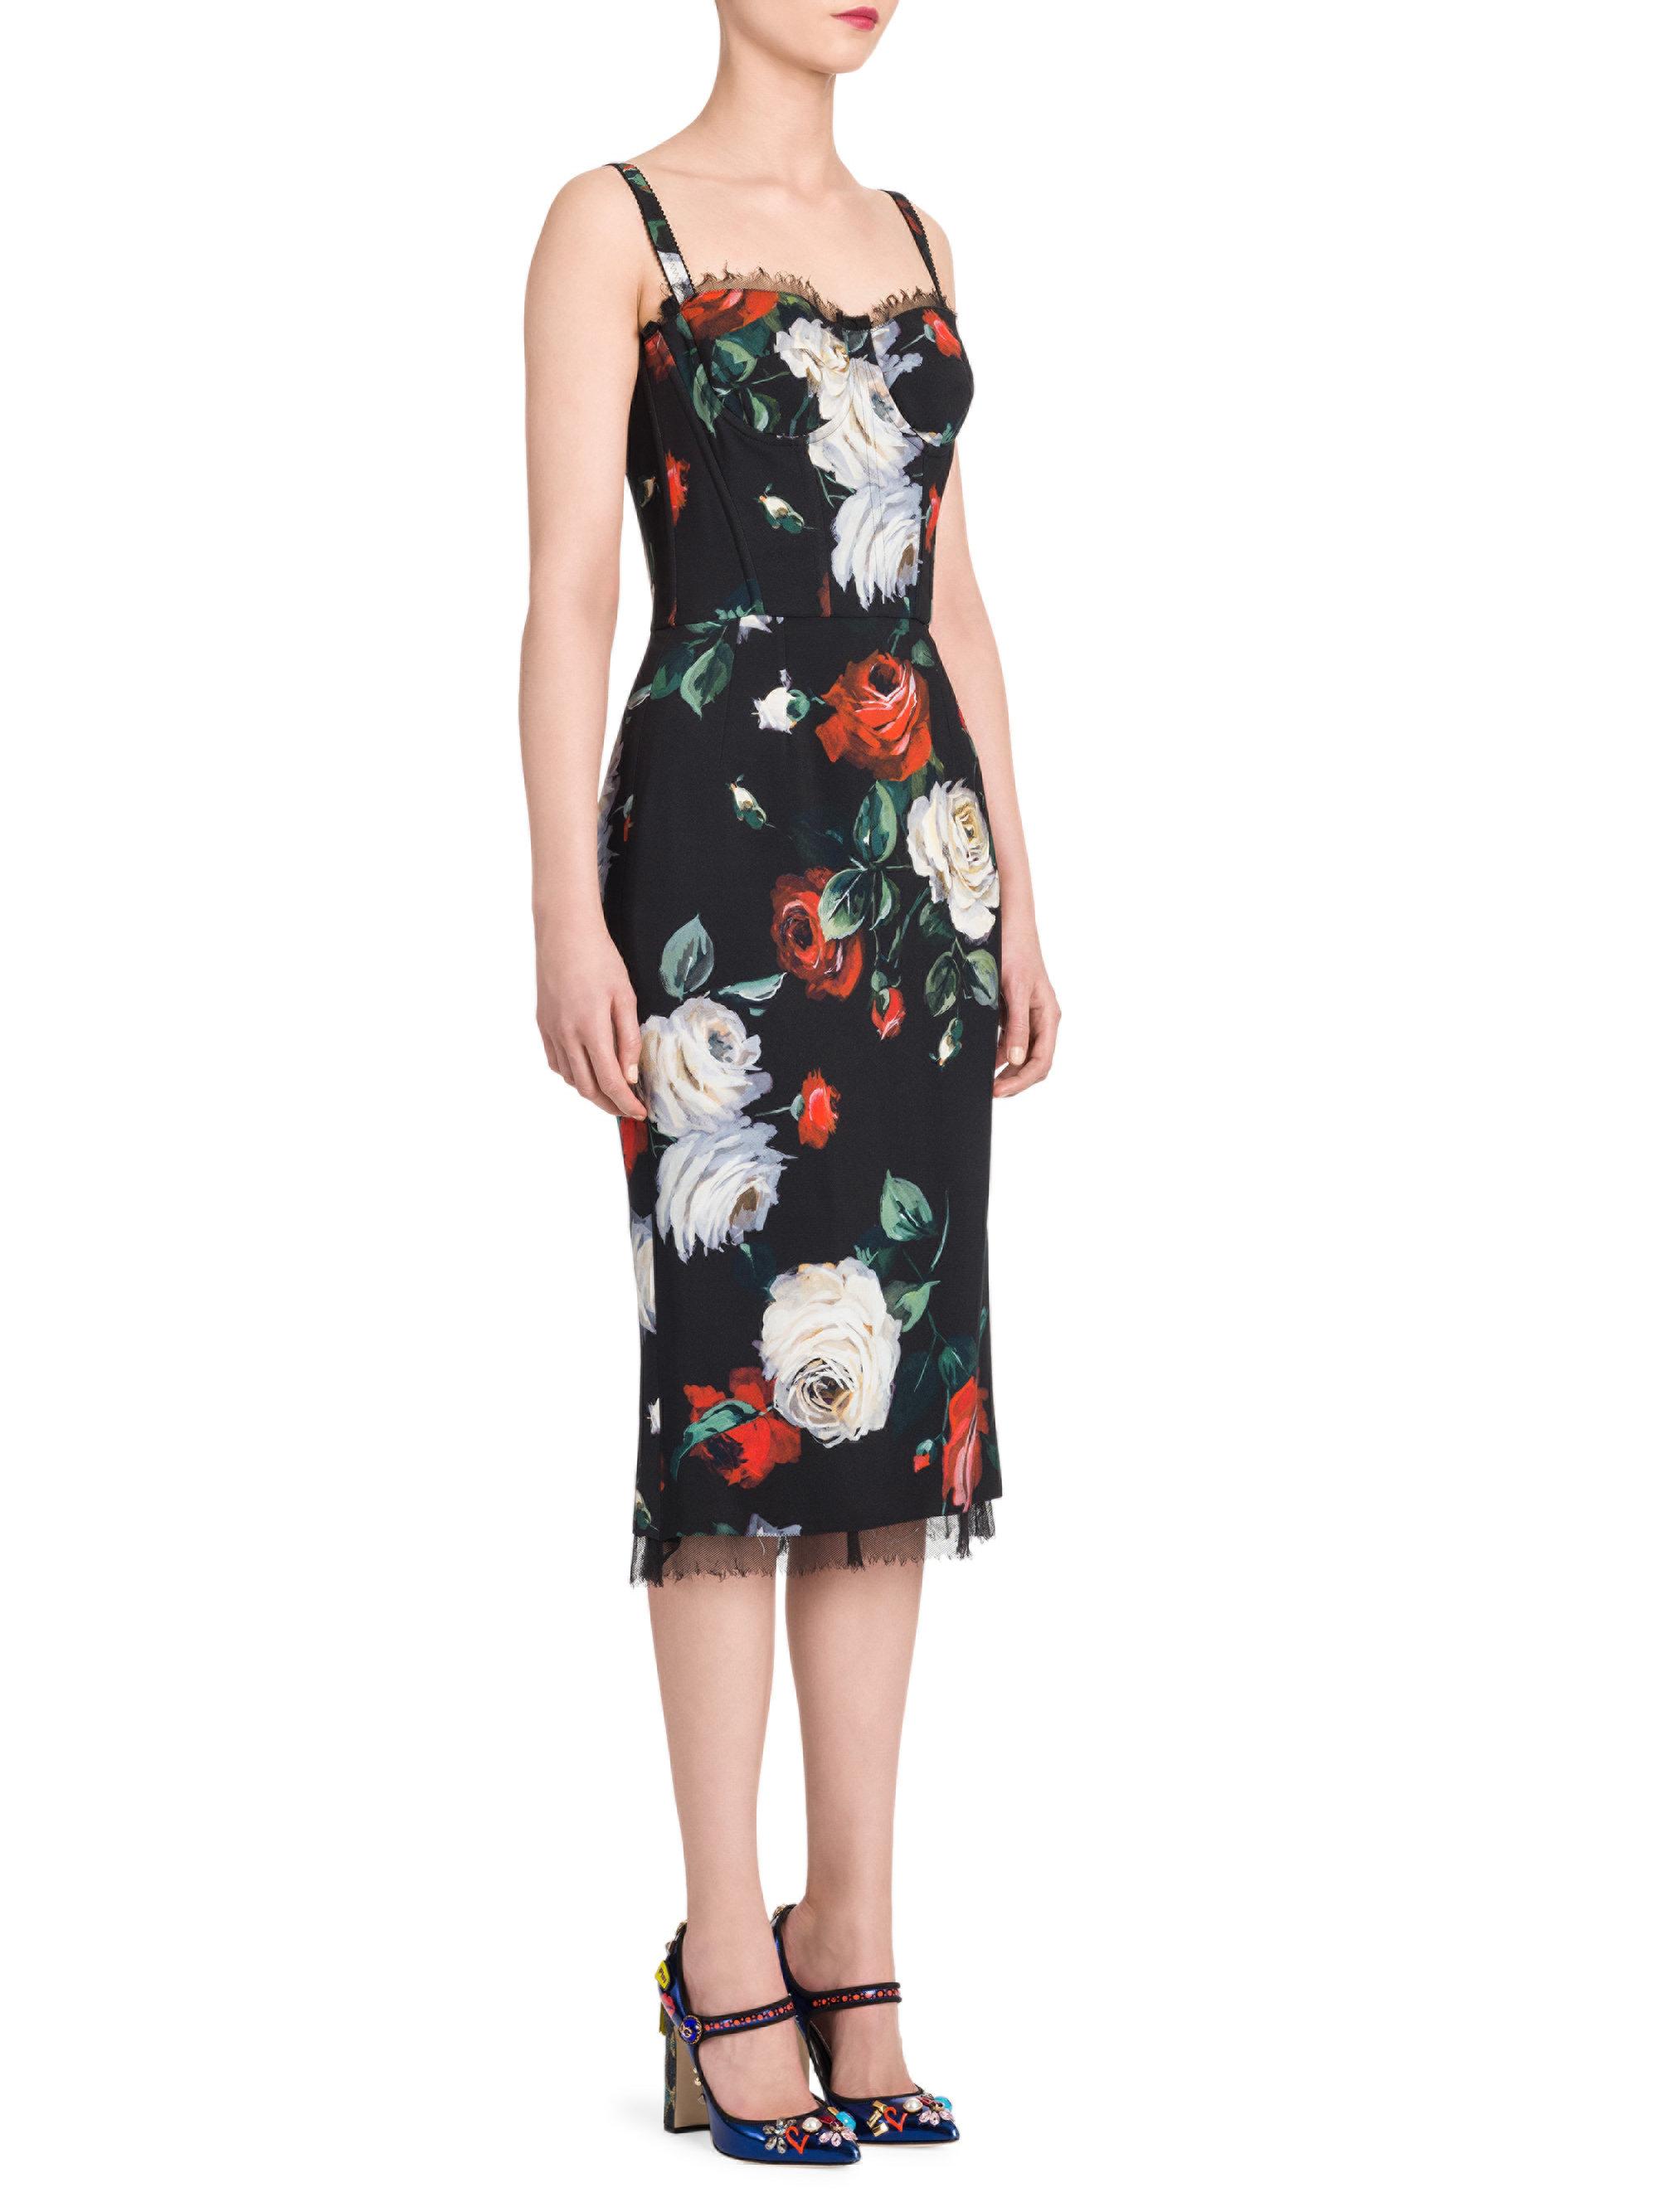 Dolce & Gabbana Floral Bustier Dress in Black | Lyst